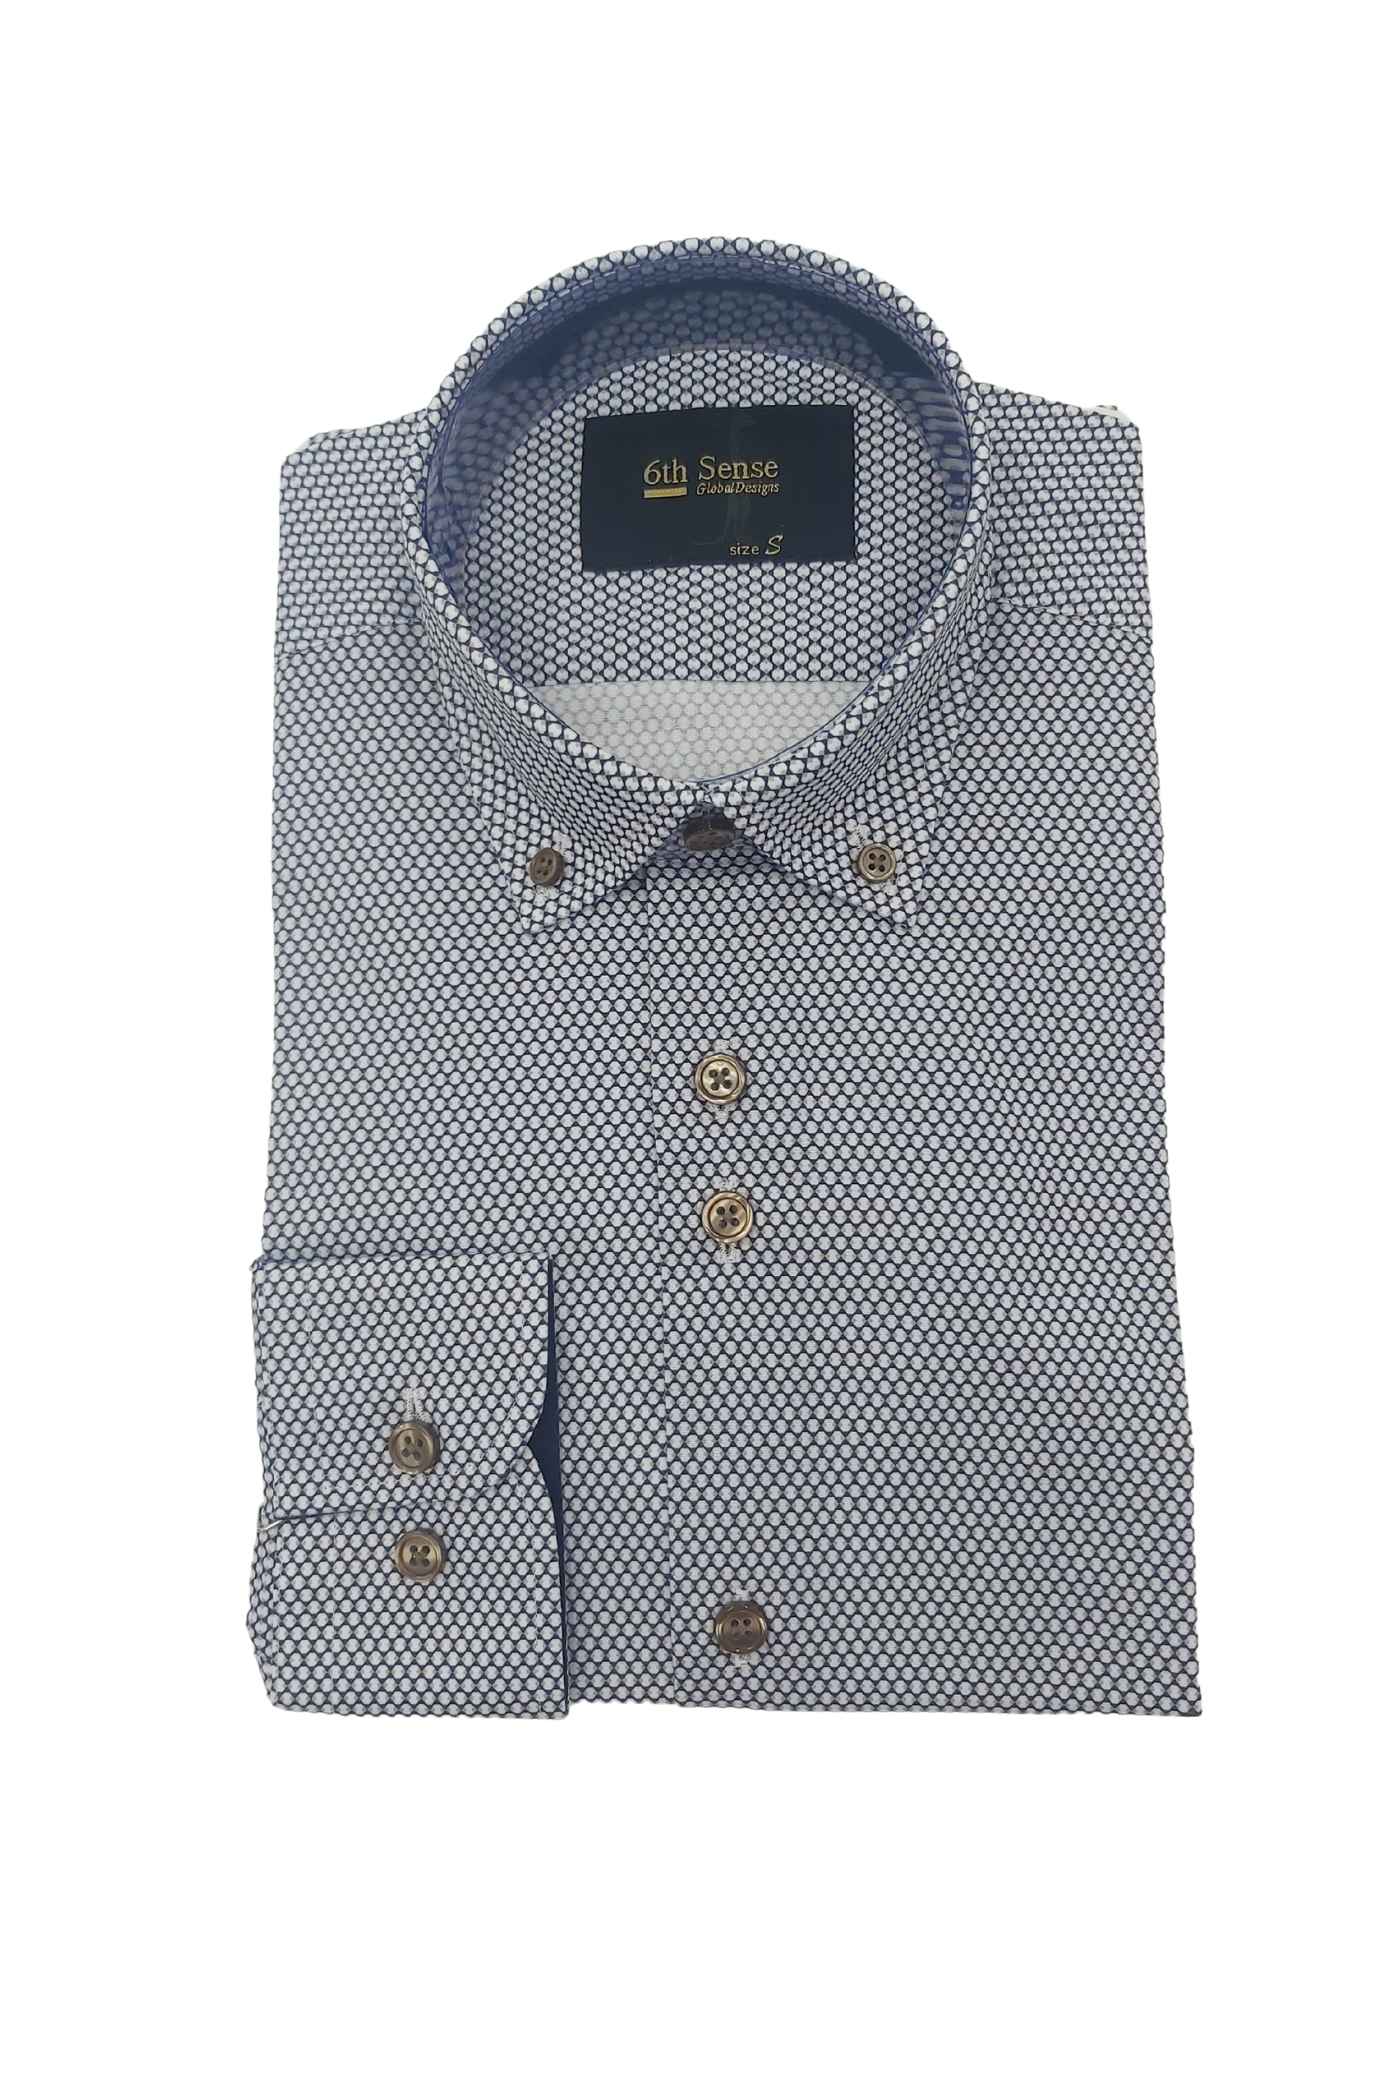 Men's Button Down Navy/White/Gold Circle Print Shirt-Front View